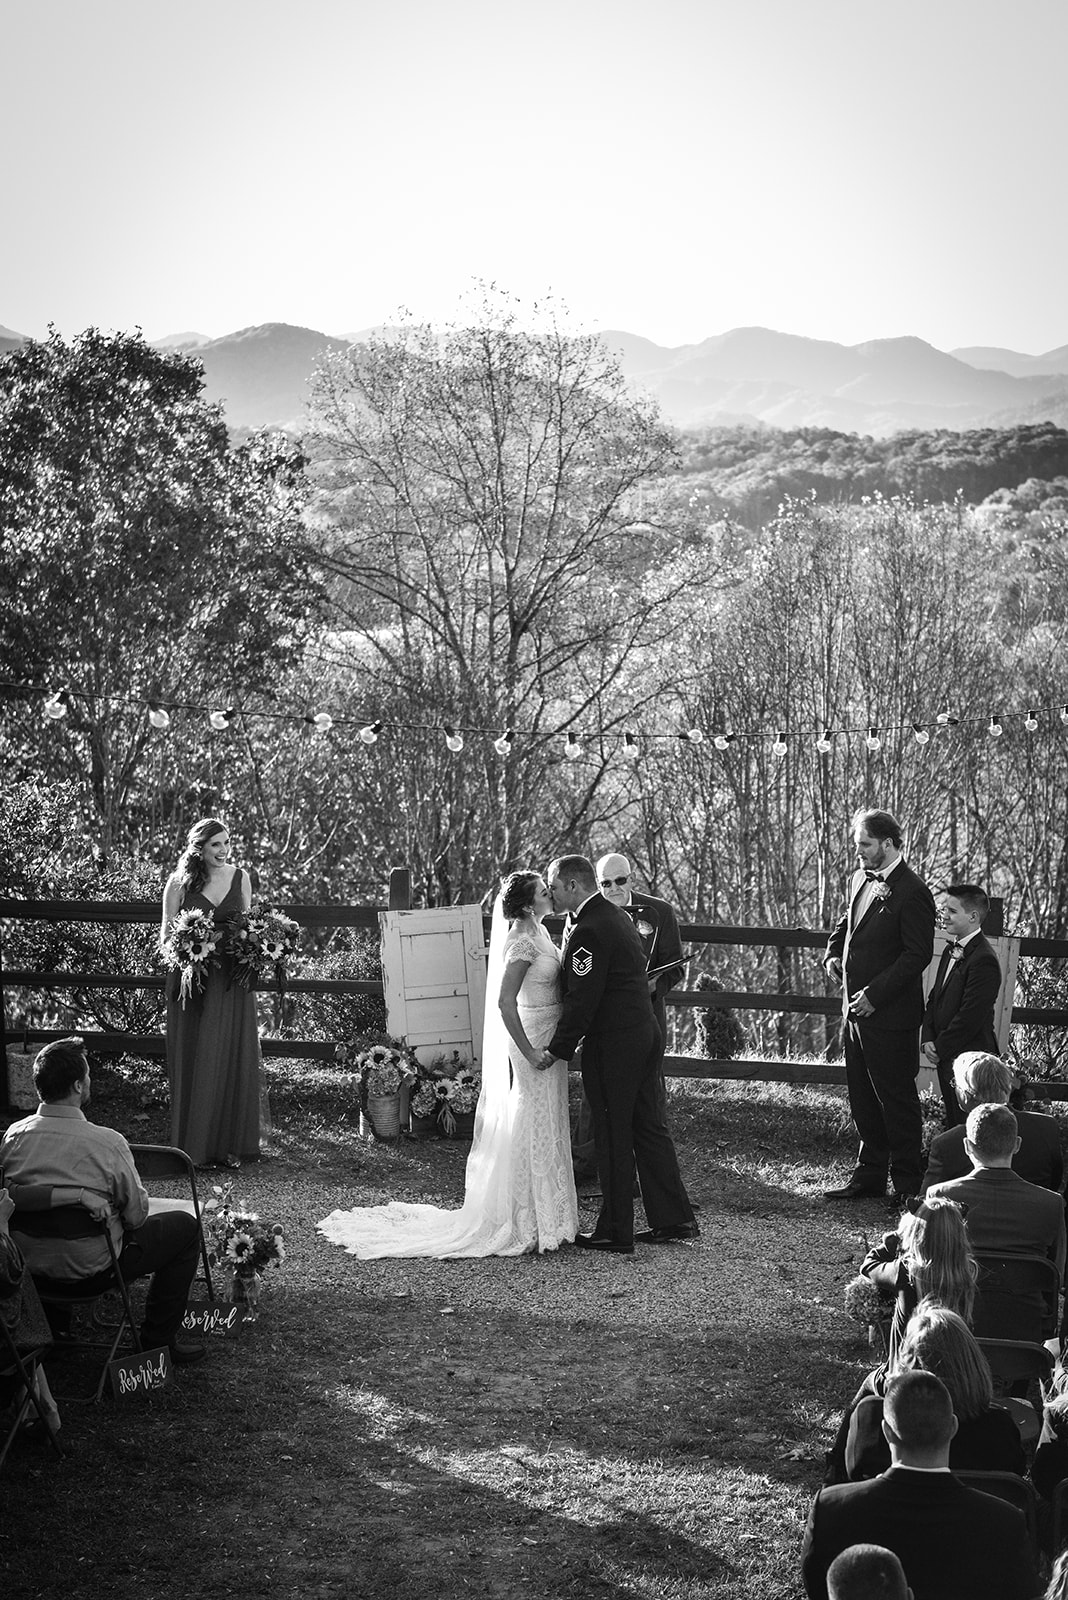 Outdoor wedding ceremony at Crest Pavilion Asheville